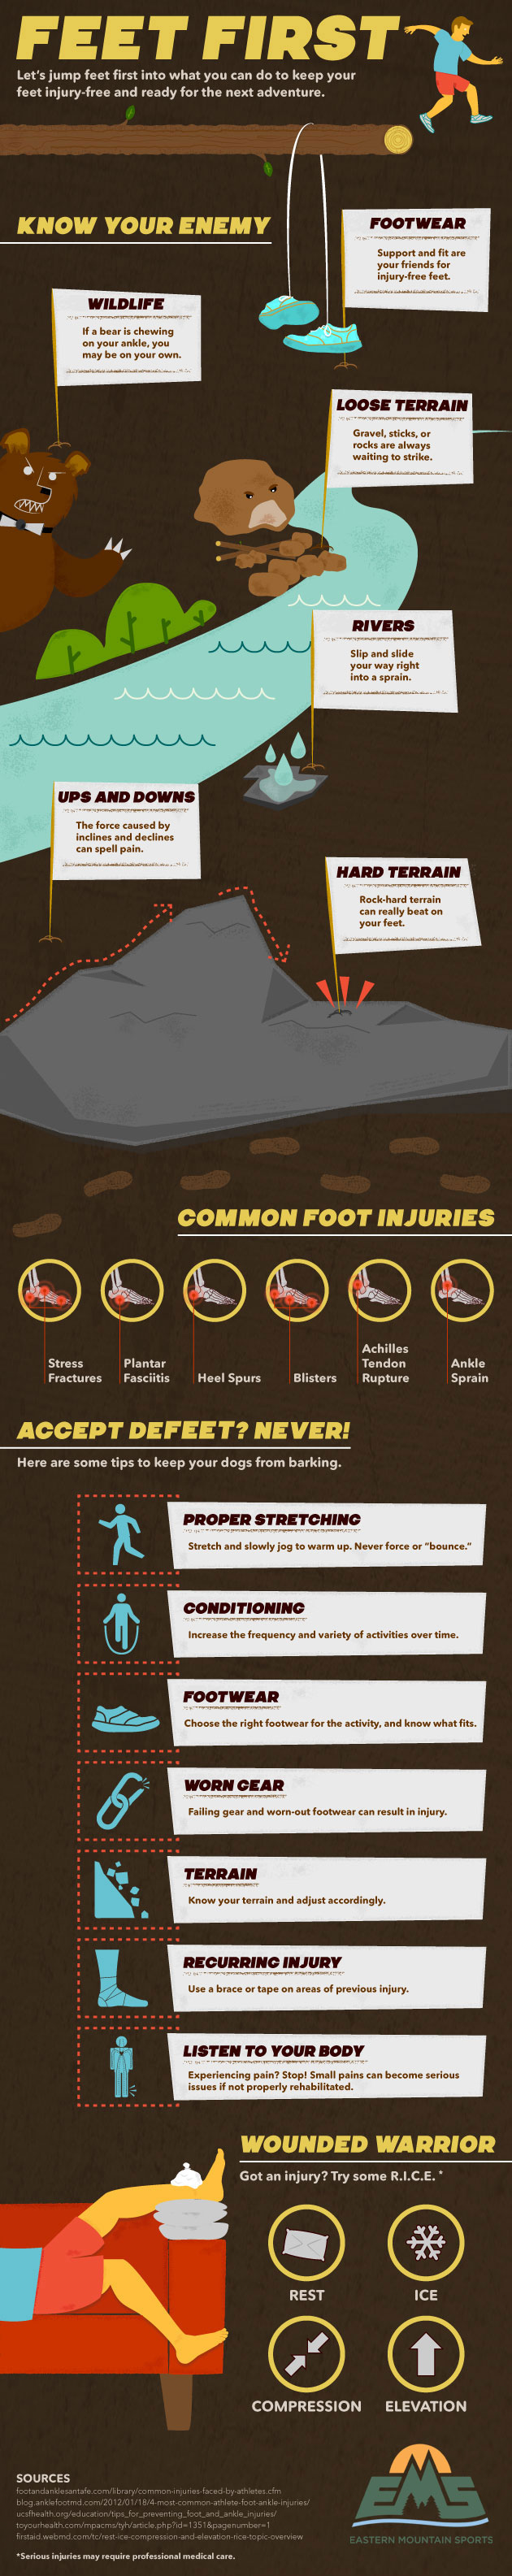 Feet First: Keeping Your Feet Injury Free